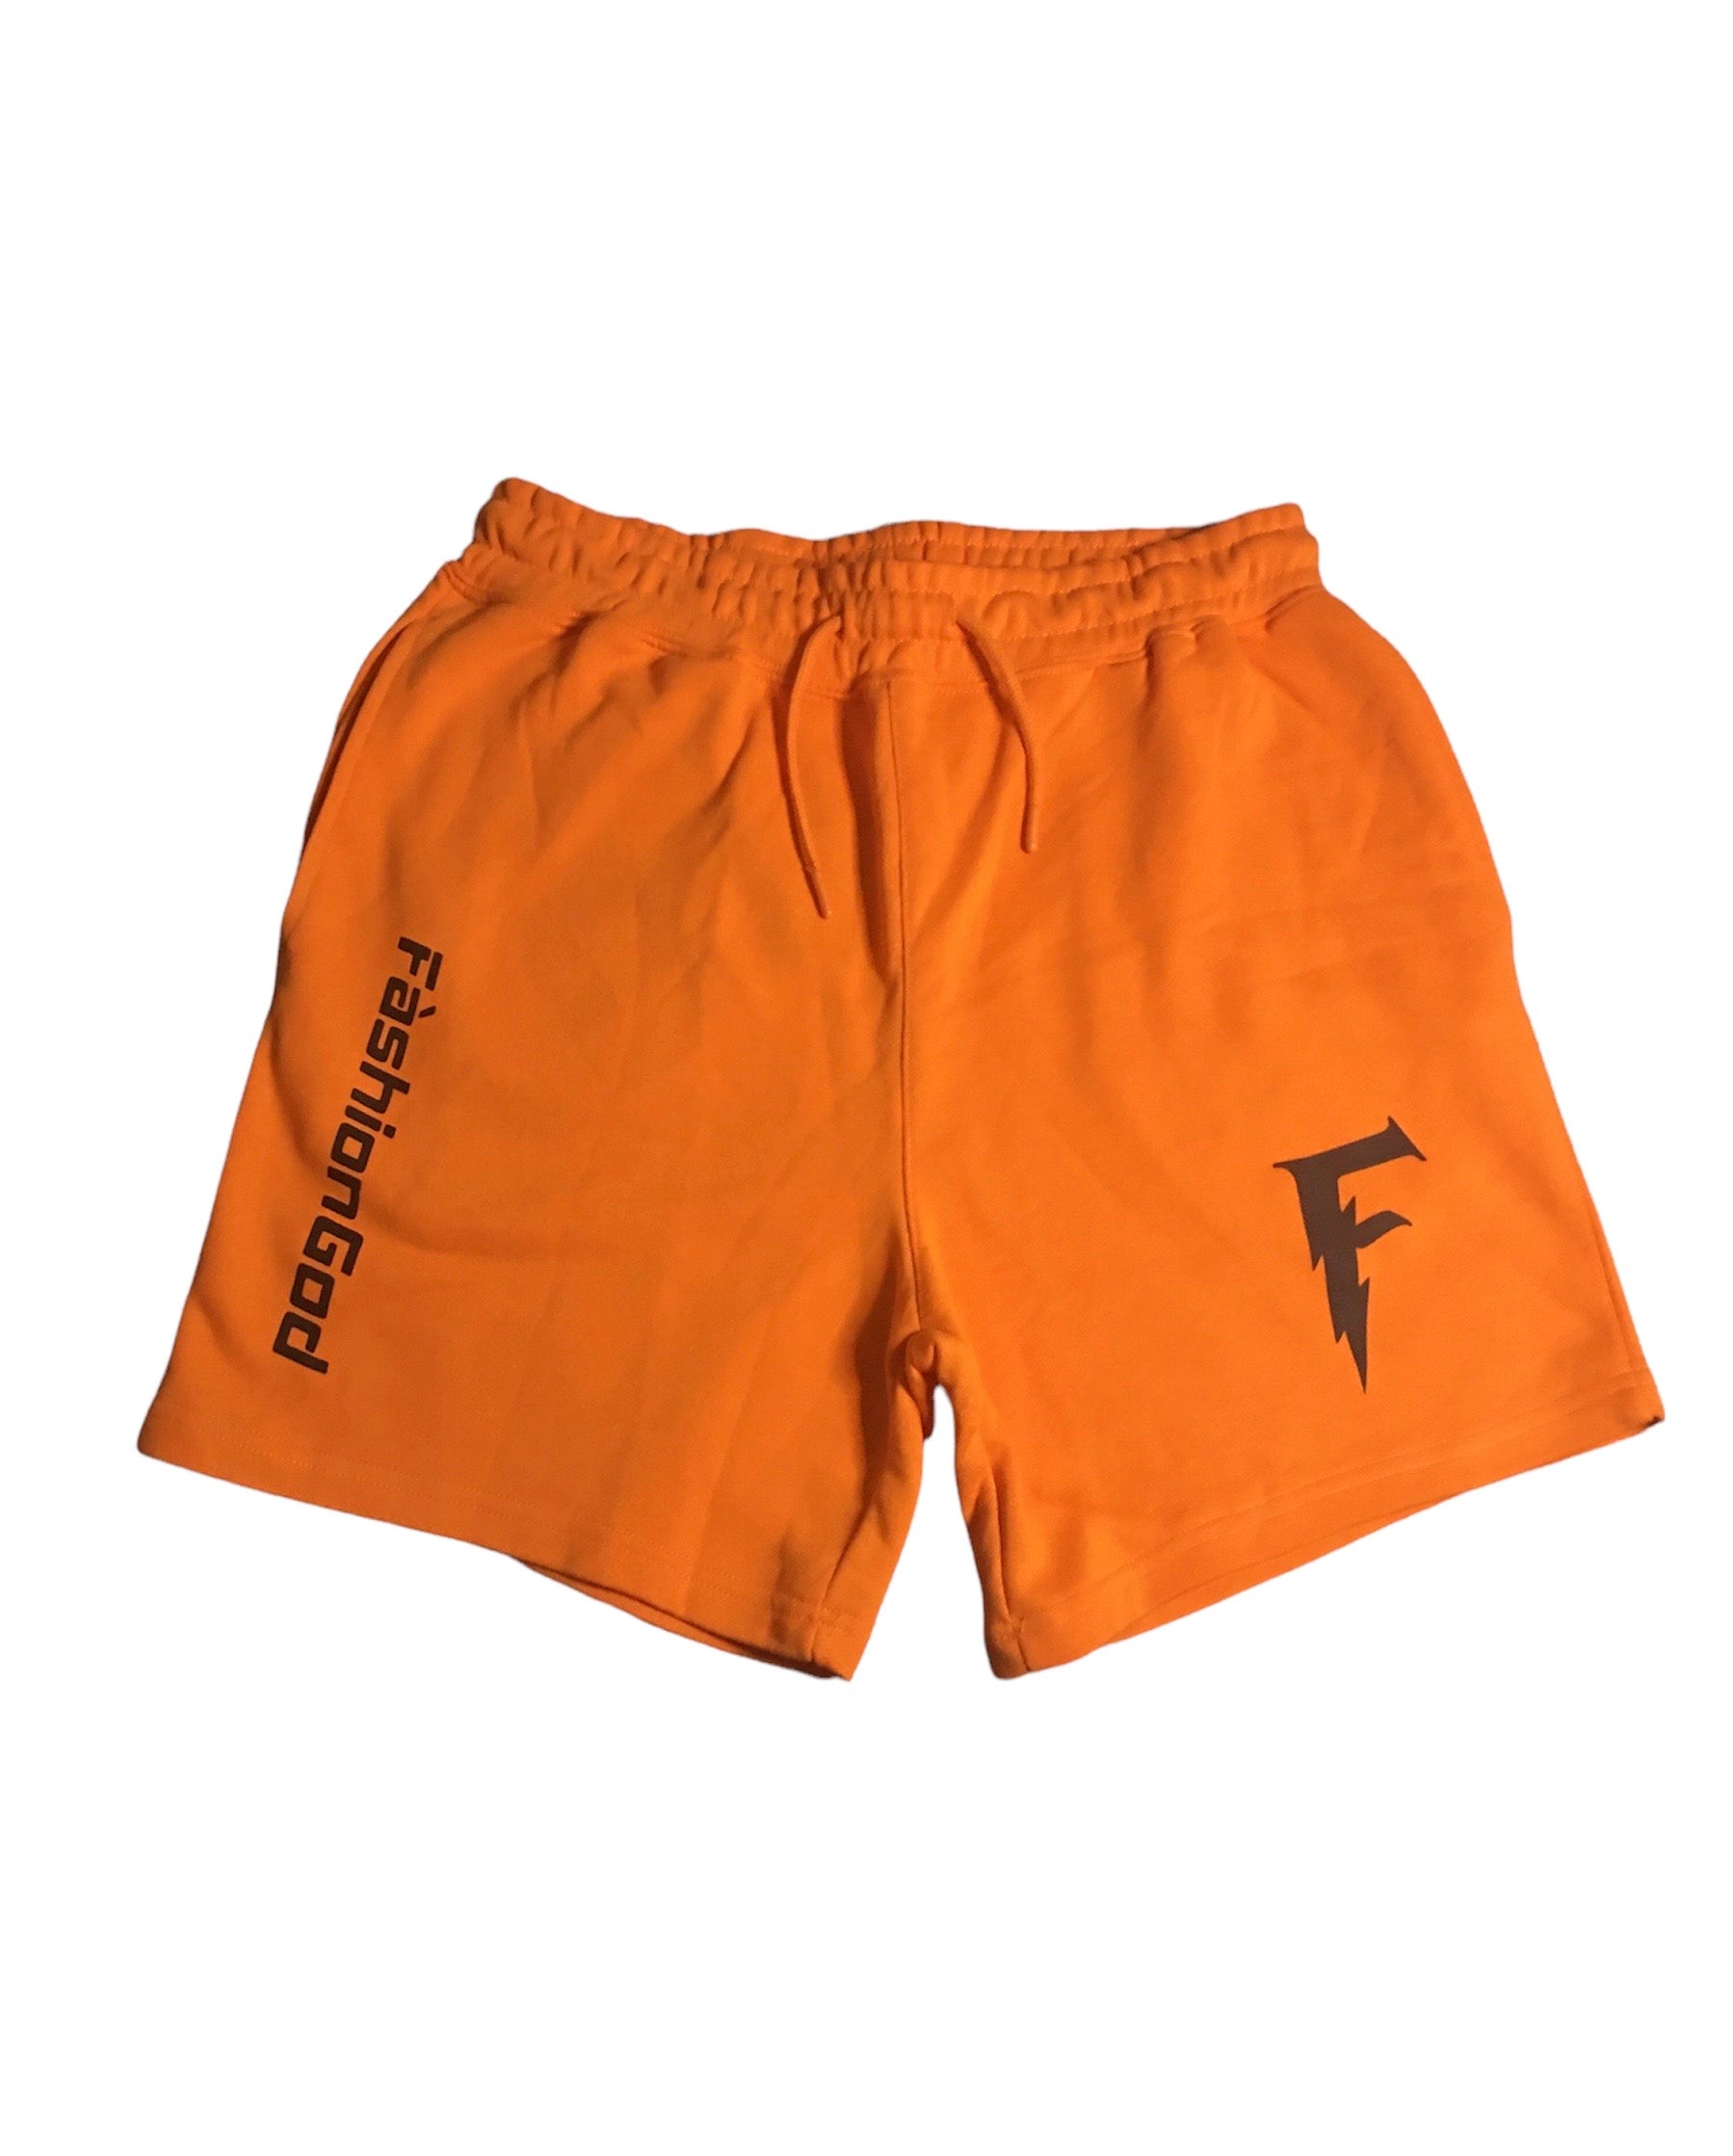 Orangetheory Shorts for Men - Poshmark